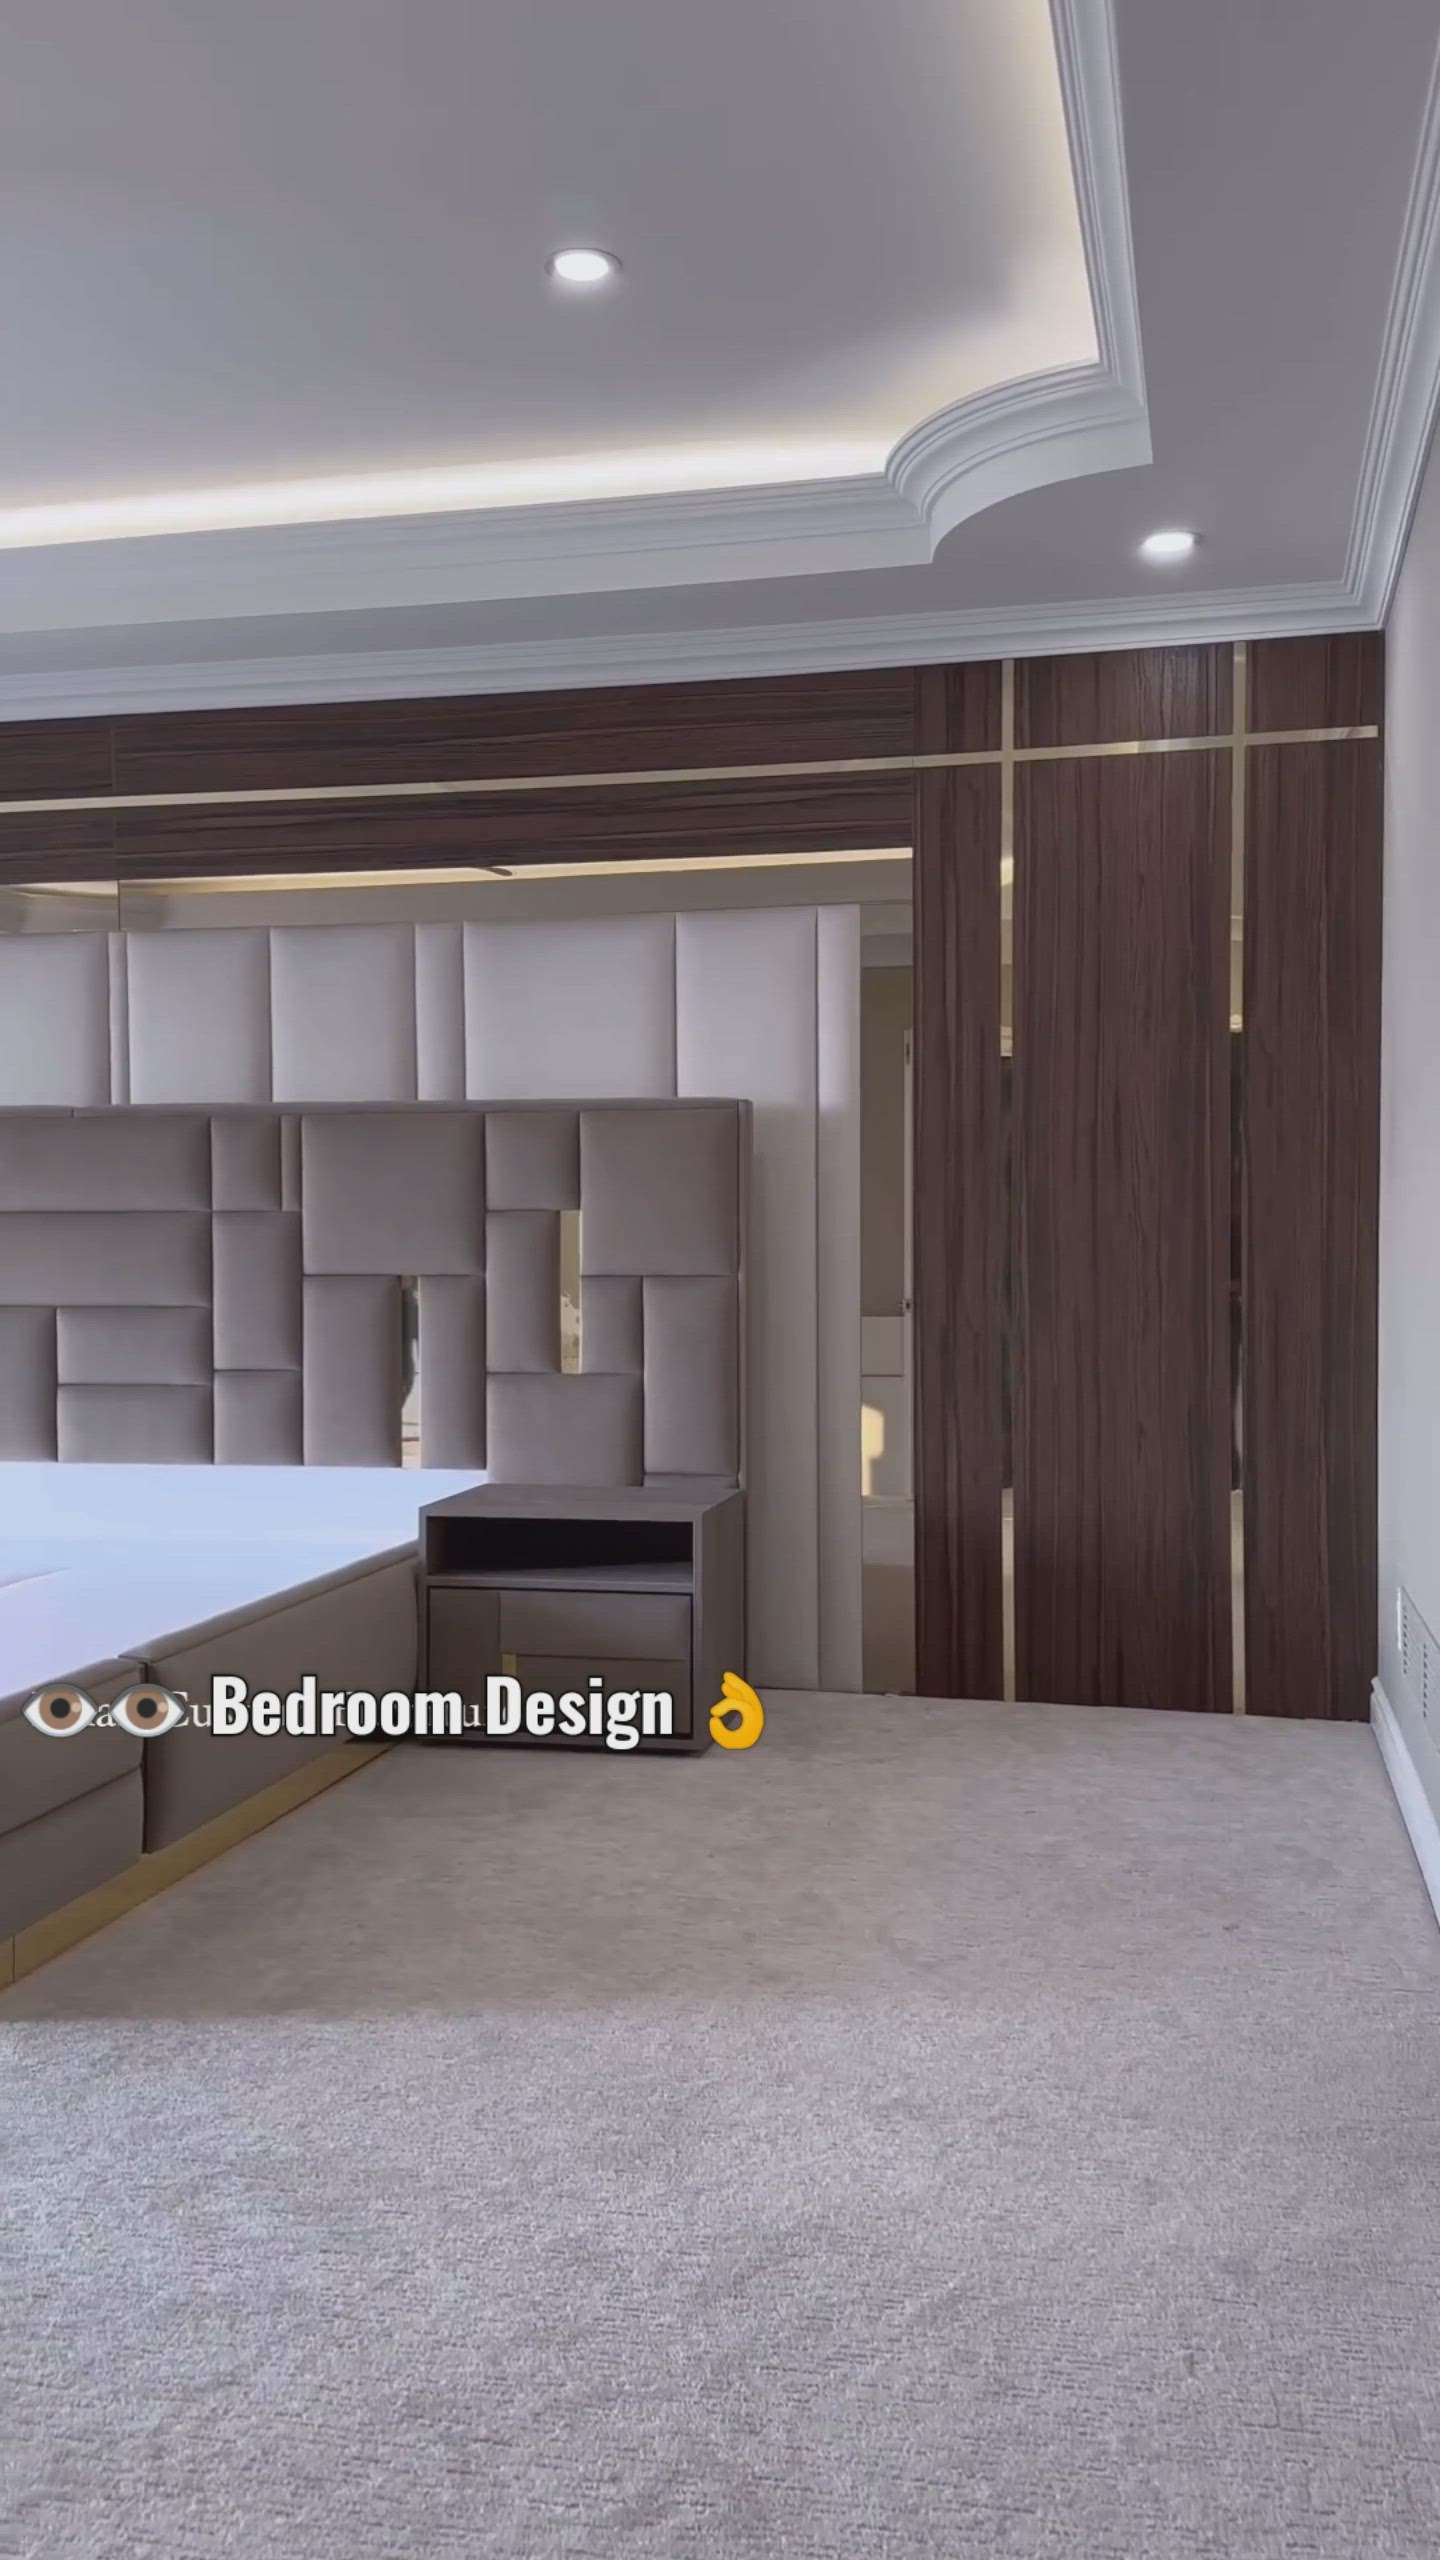 Eye Catching Bedroom Design
Call for Construction Renovation Interior
Akhil Arora 9982020005
#MasterBedroom #viralkolo #viralposts #KingsizeBedroom #bedroomdesign  #shubharambhinfinity #kaurm